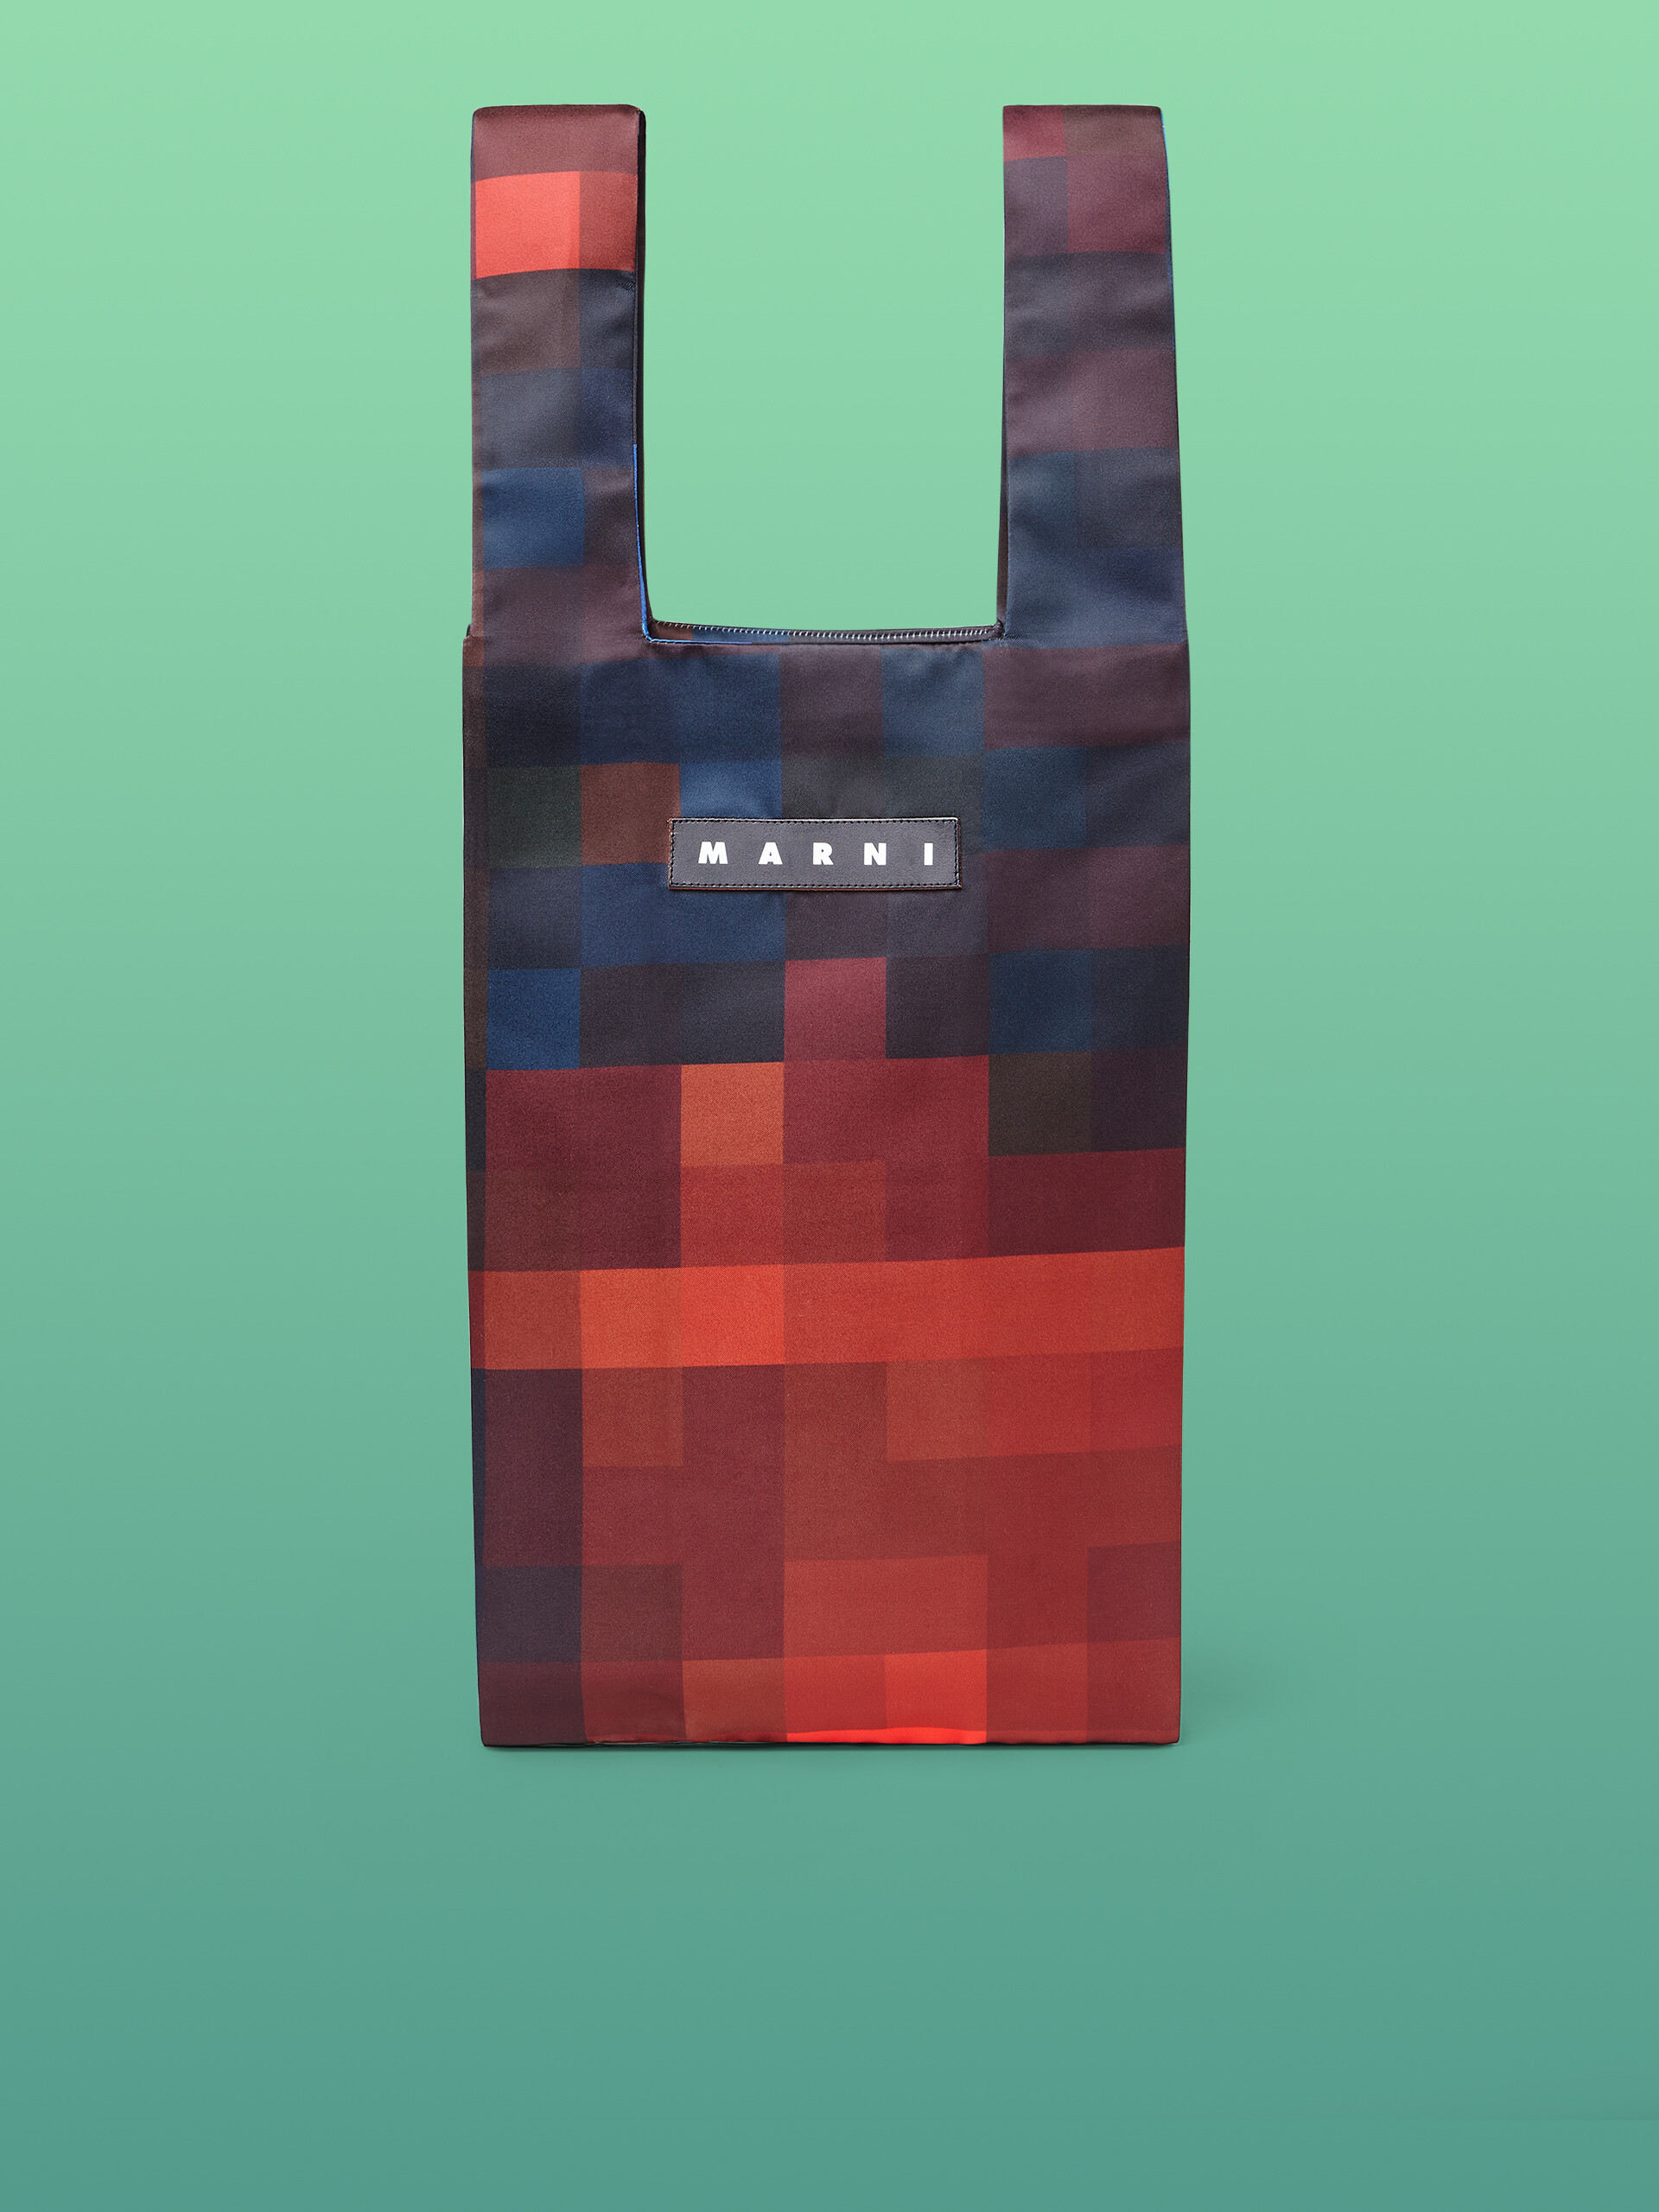 MARNI MARKET shopping bag with pixel print - Shopping Bags - Image 1